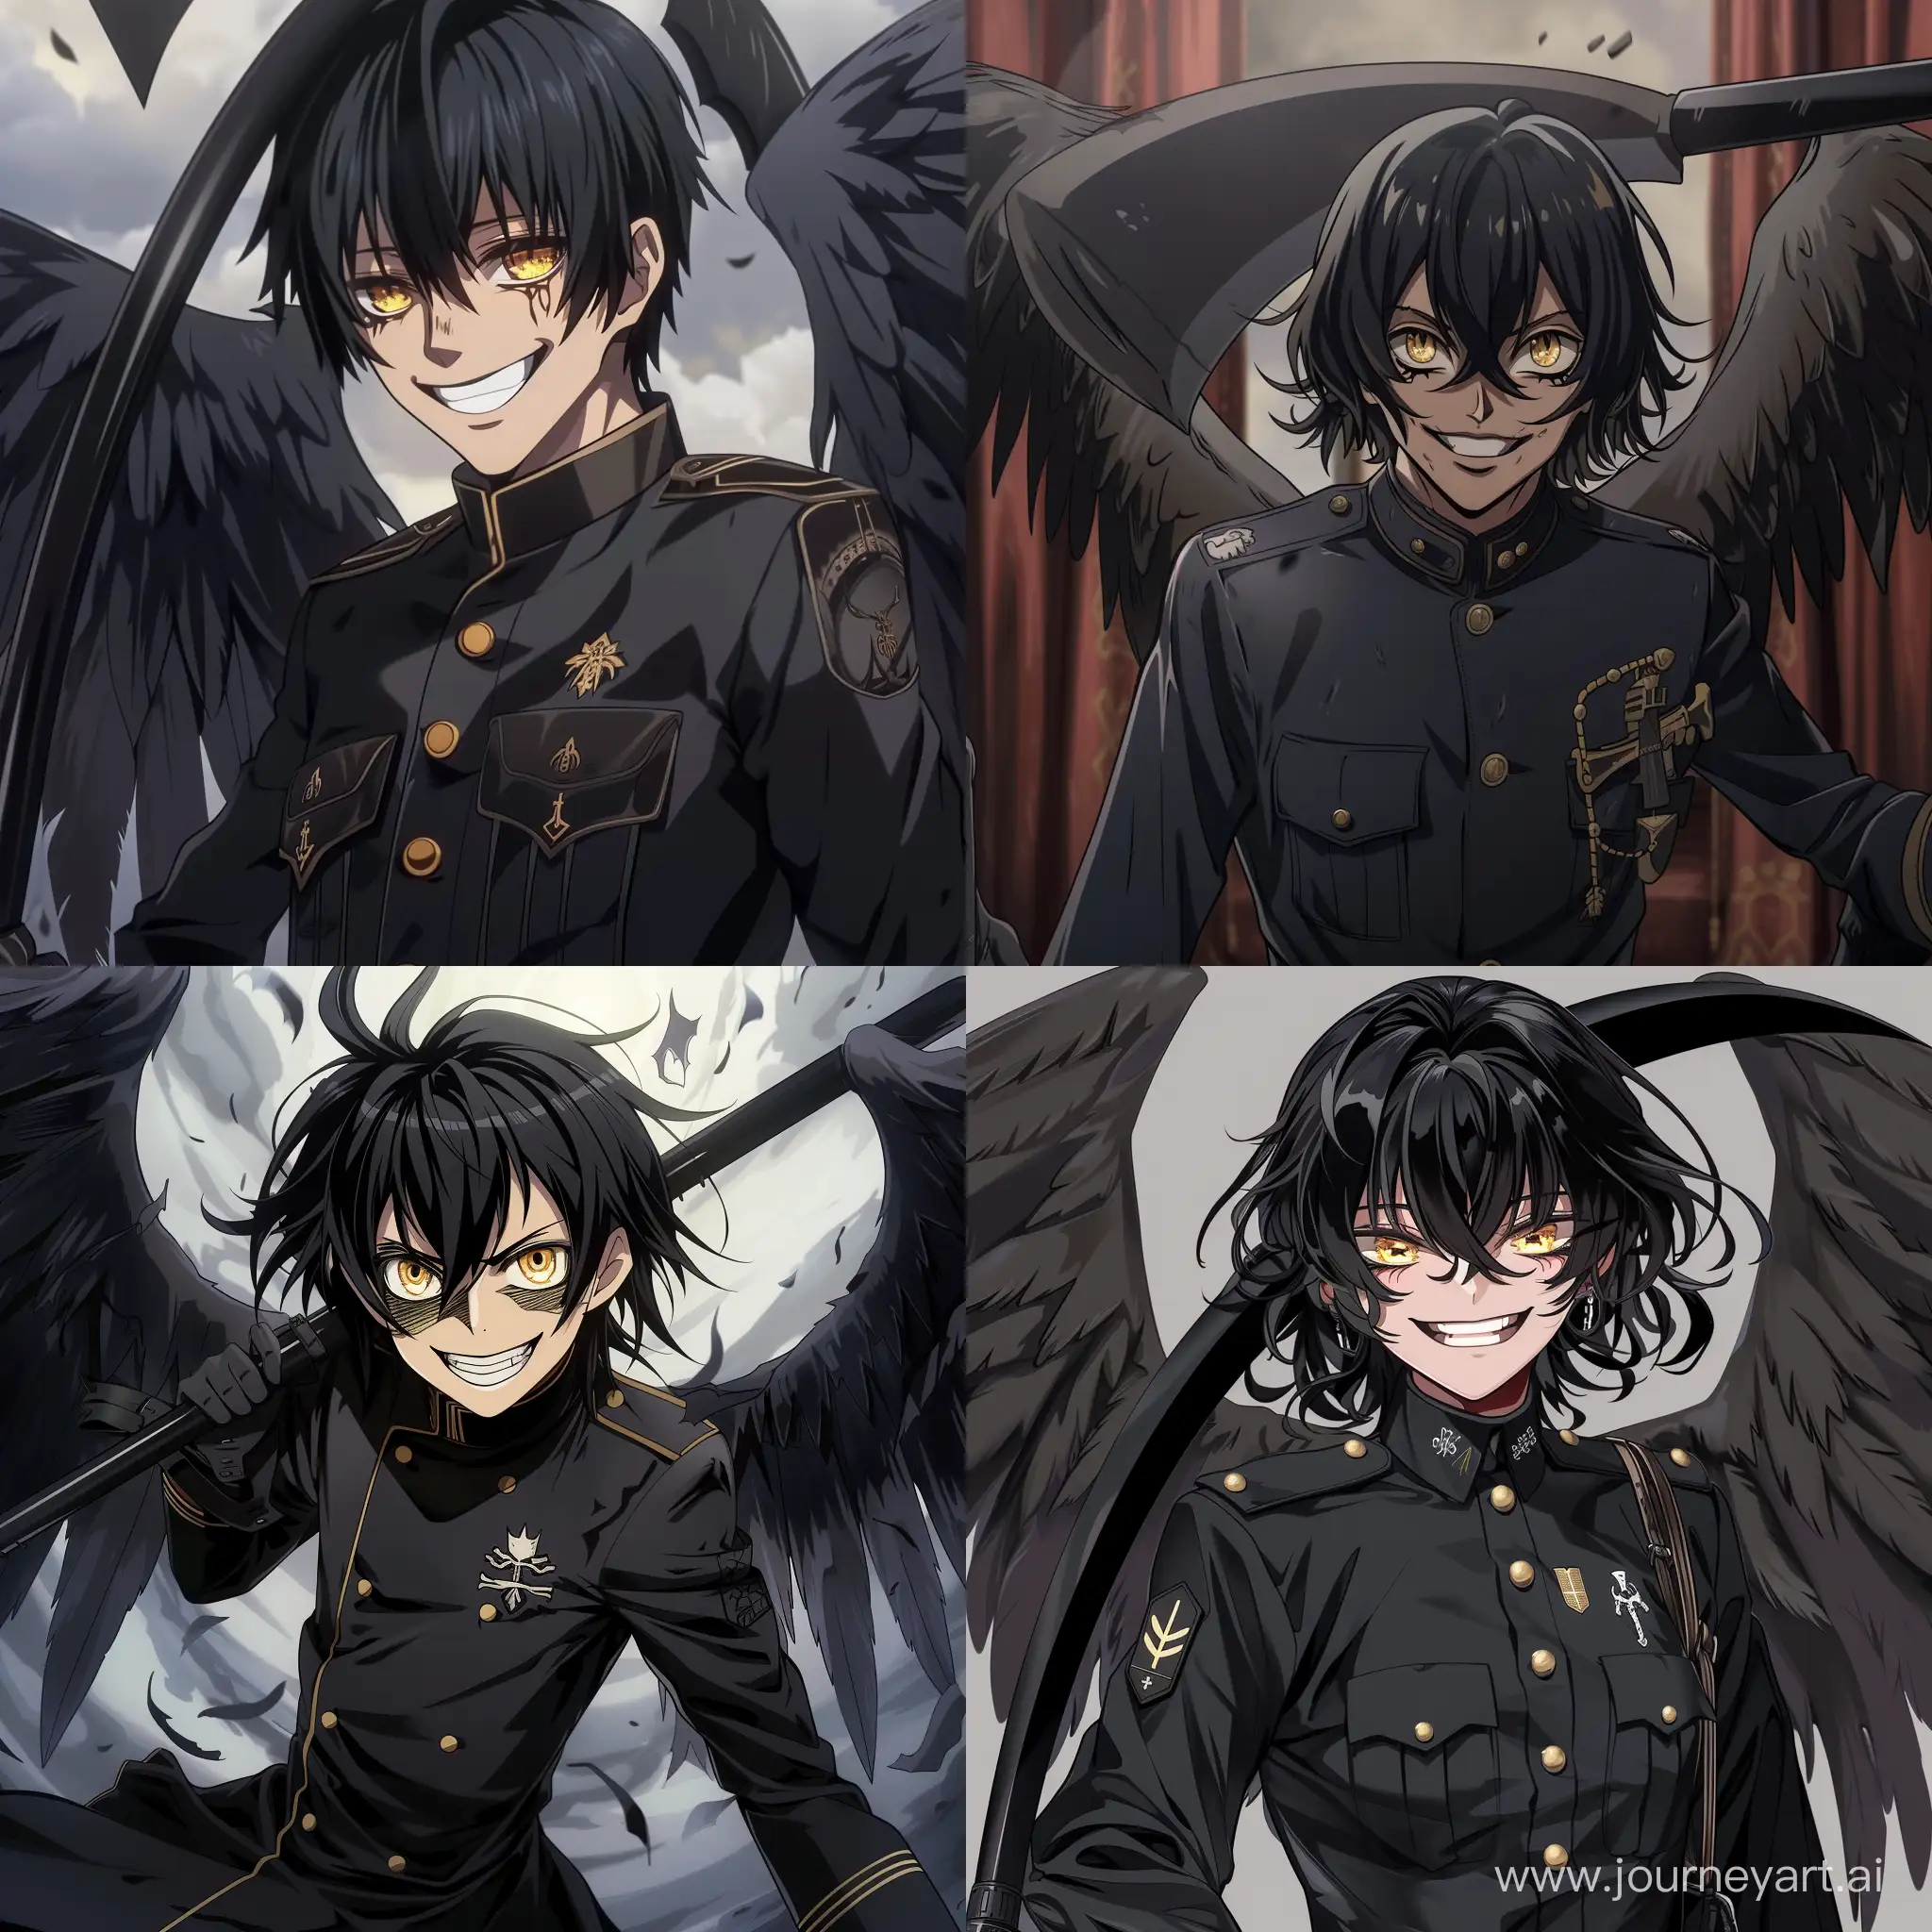 Joyful-Animestyle-Angel-of-Death-with-Black-Scythe-and-Golden-Eyes